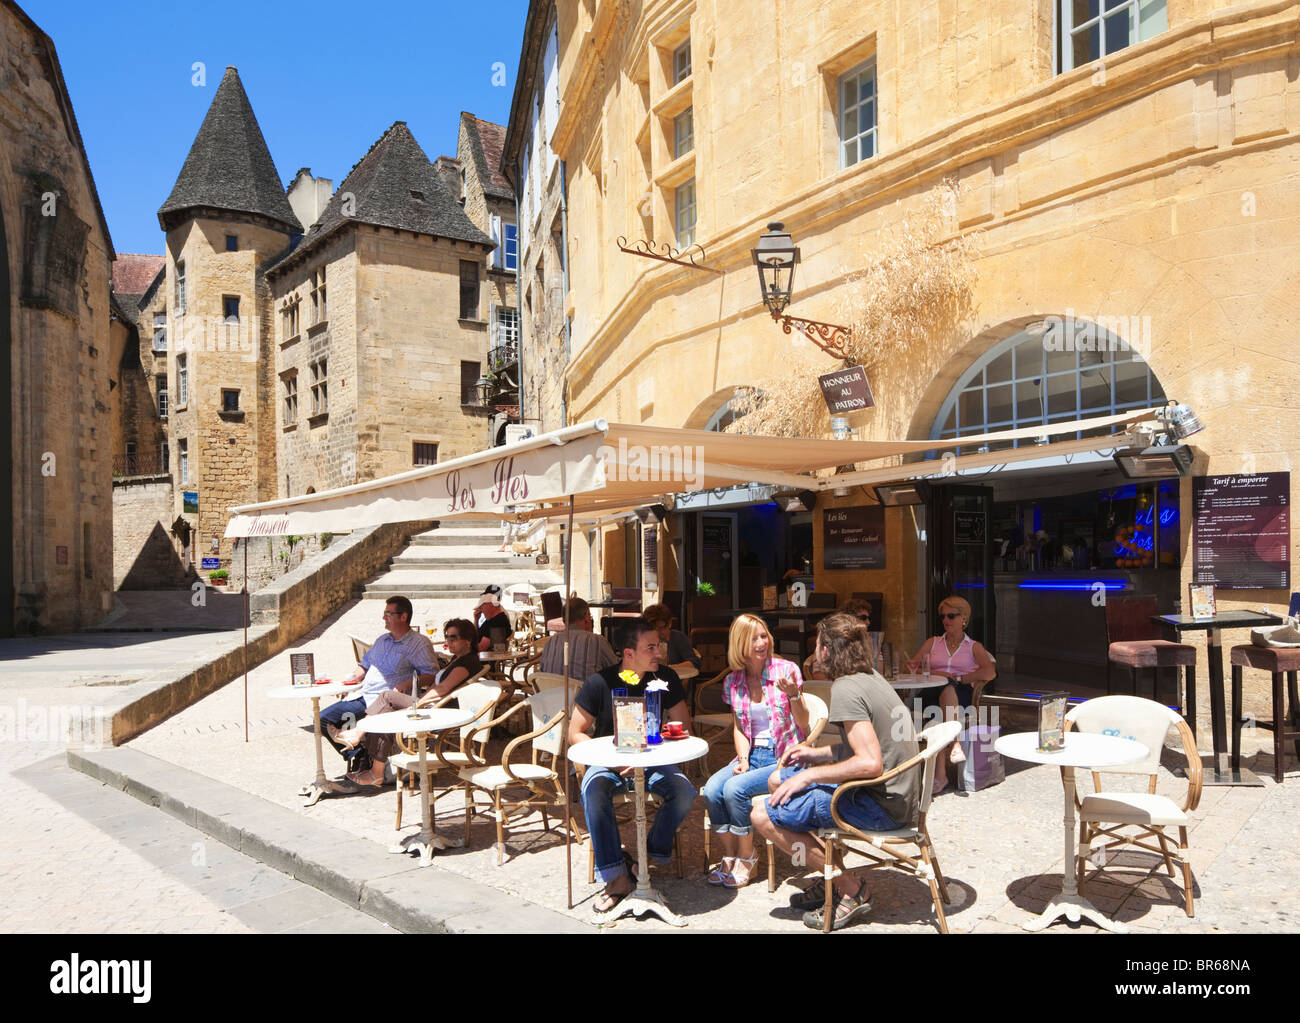 Menschen in Cafés in Place De La Liberte, Sarlat la Caneda; Dordogne; Frankreich Stockfoto